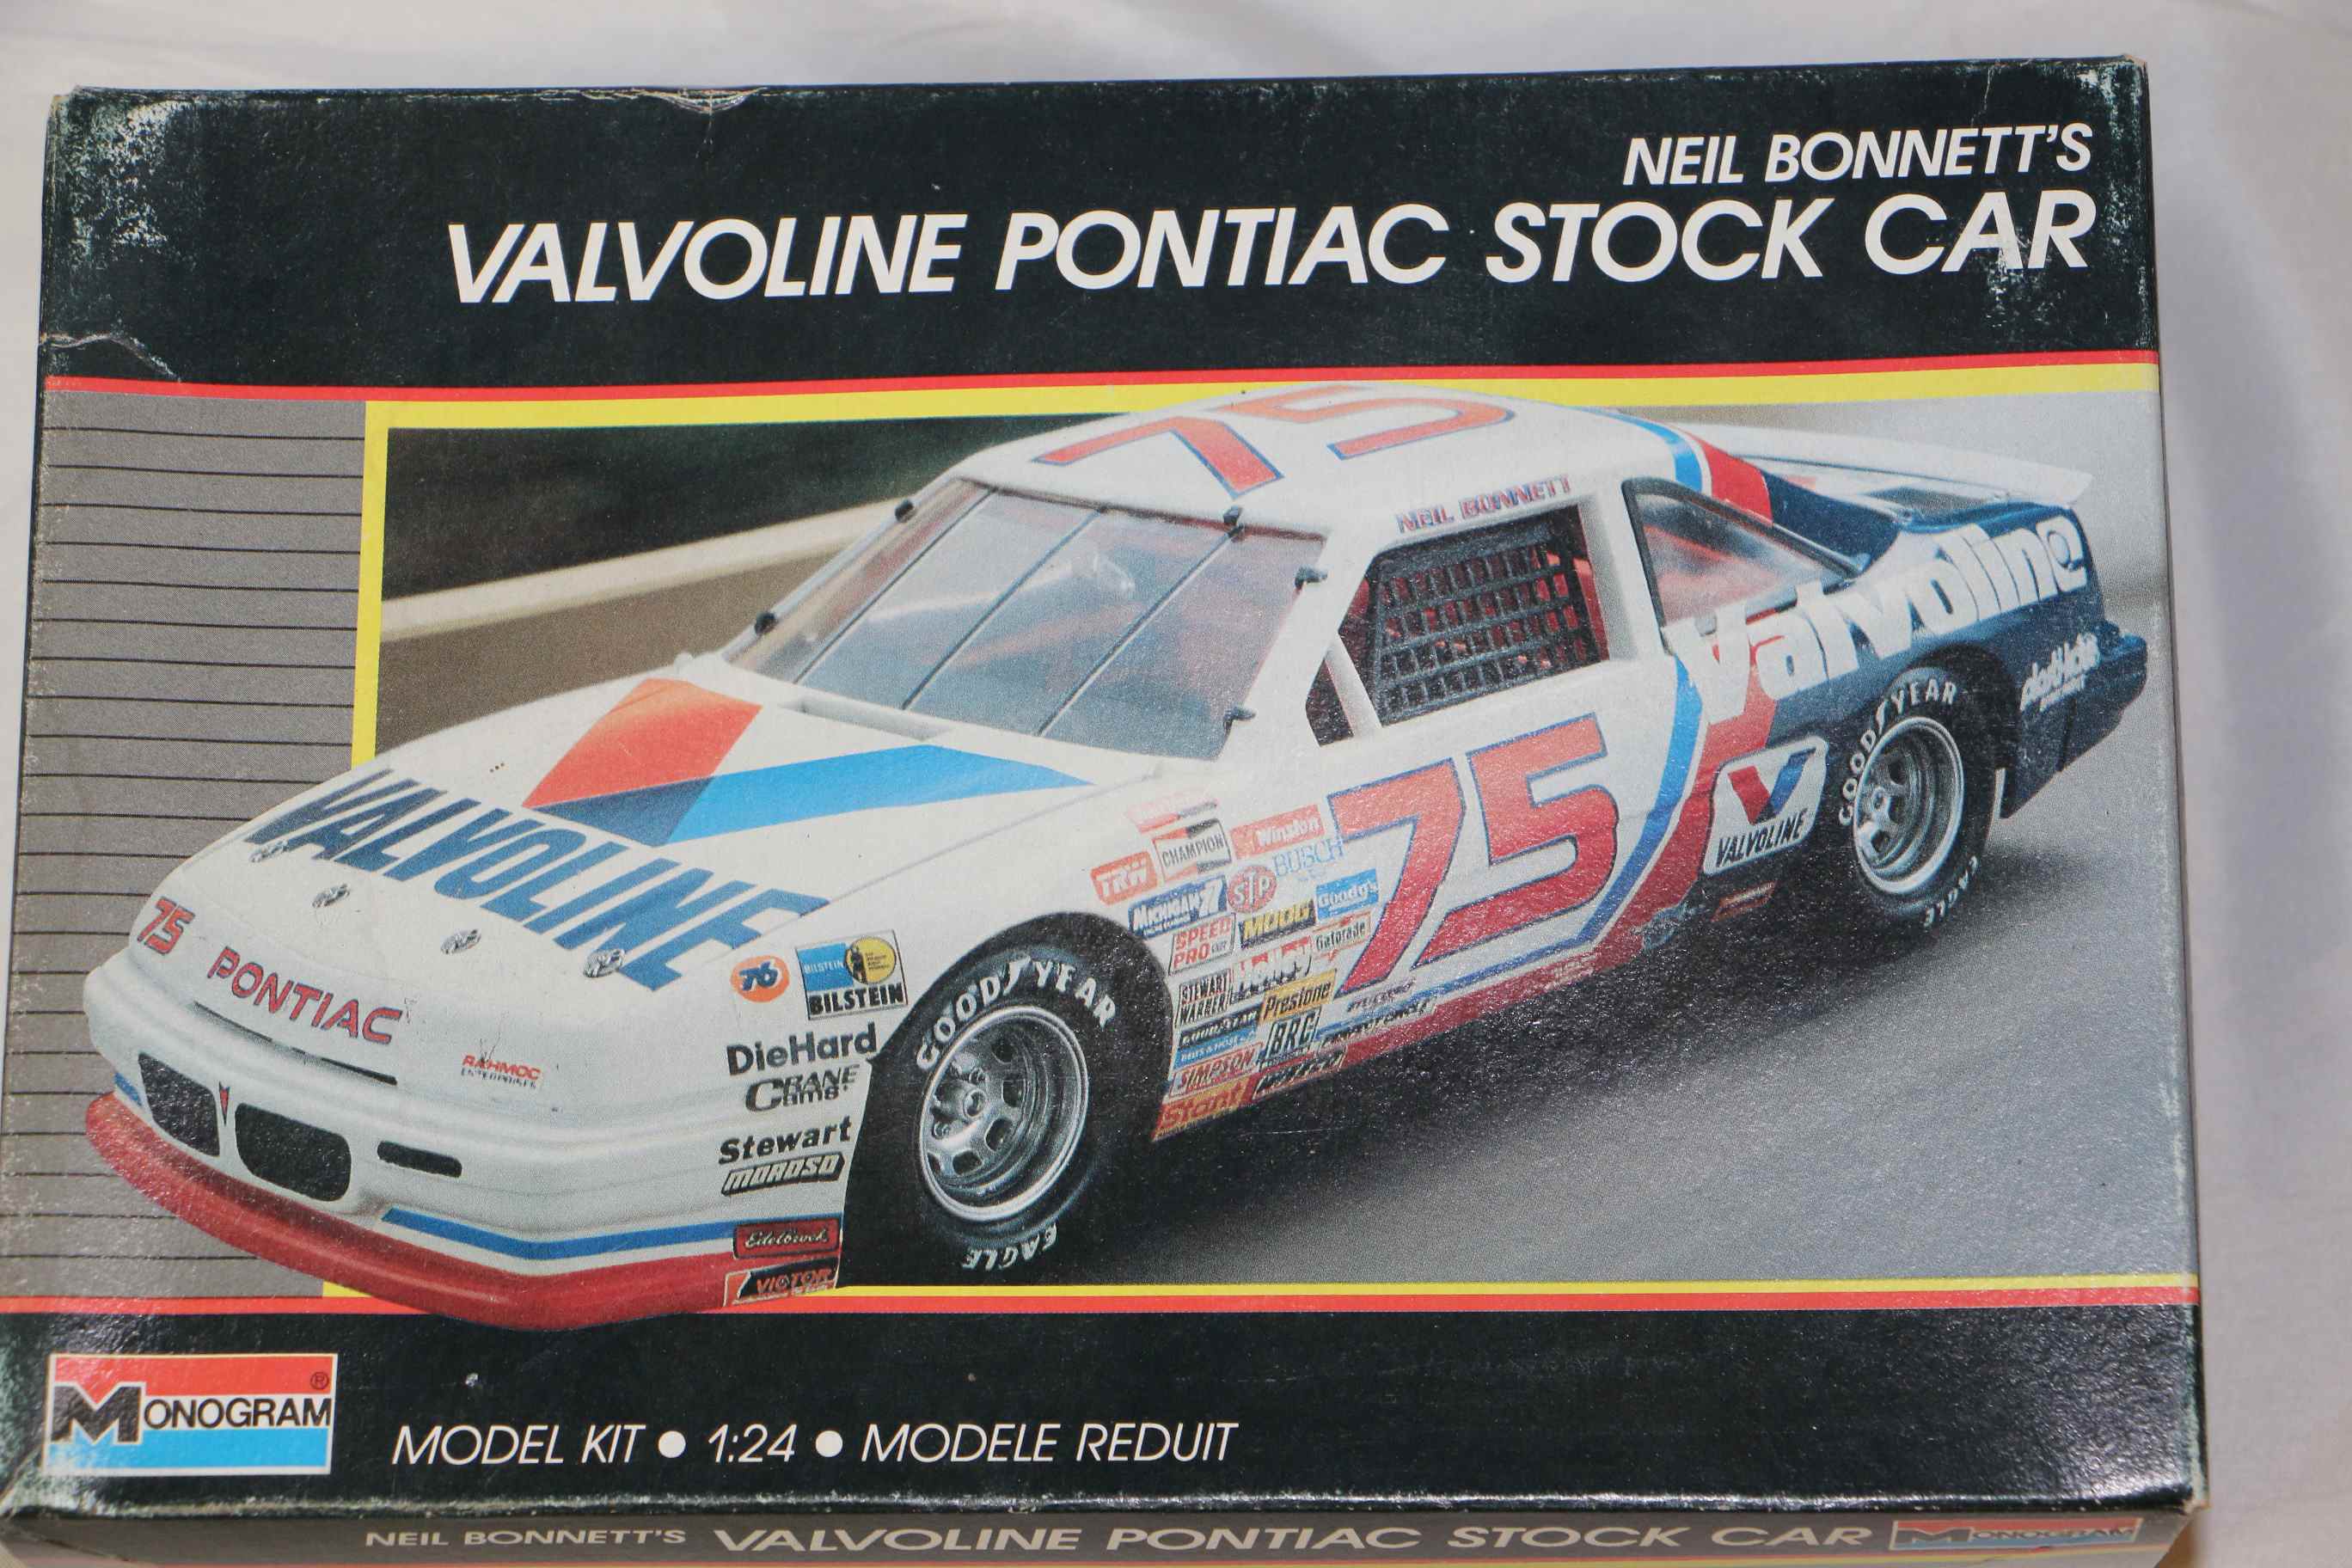 MON2787 - Monogram 1/24 Valvoline Pontiac Stock Car